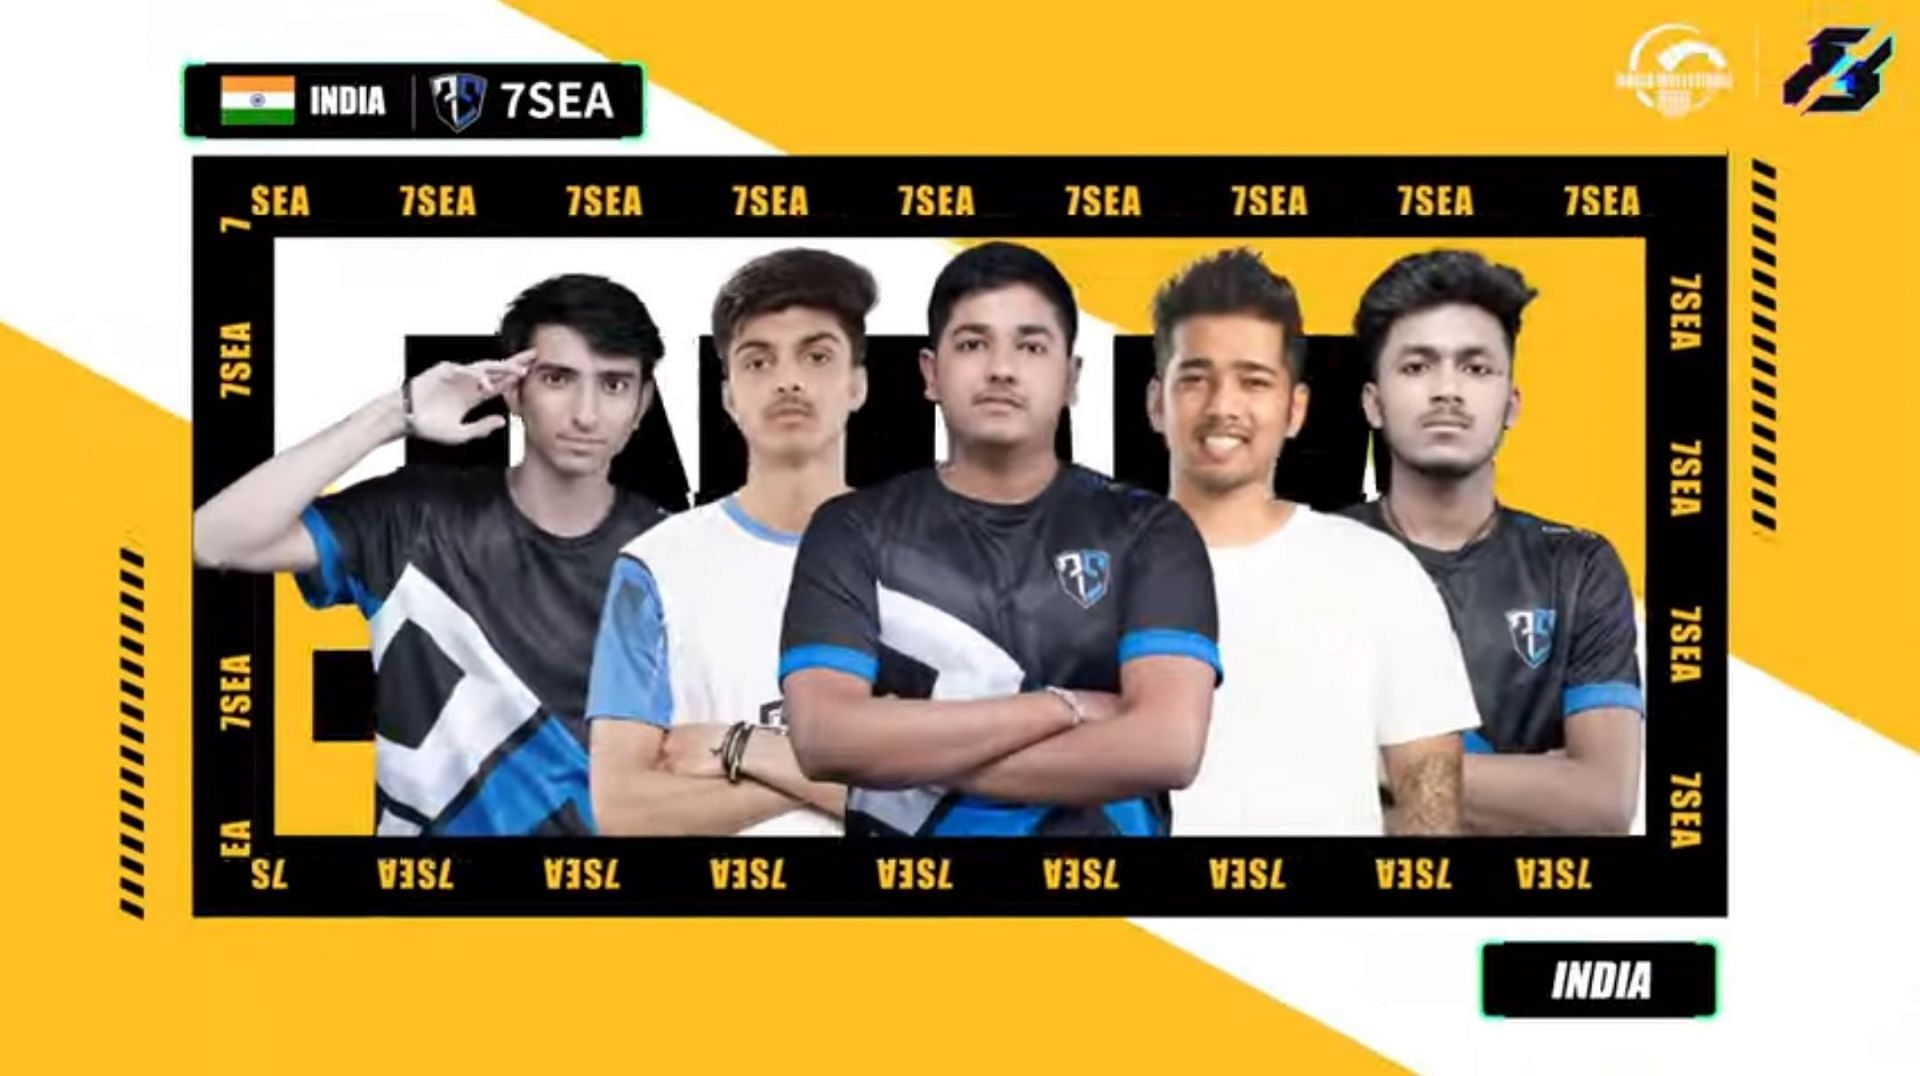 7Sea squad for World Invitational 2022 (Image via PUBG Mobile)